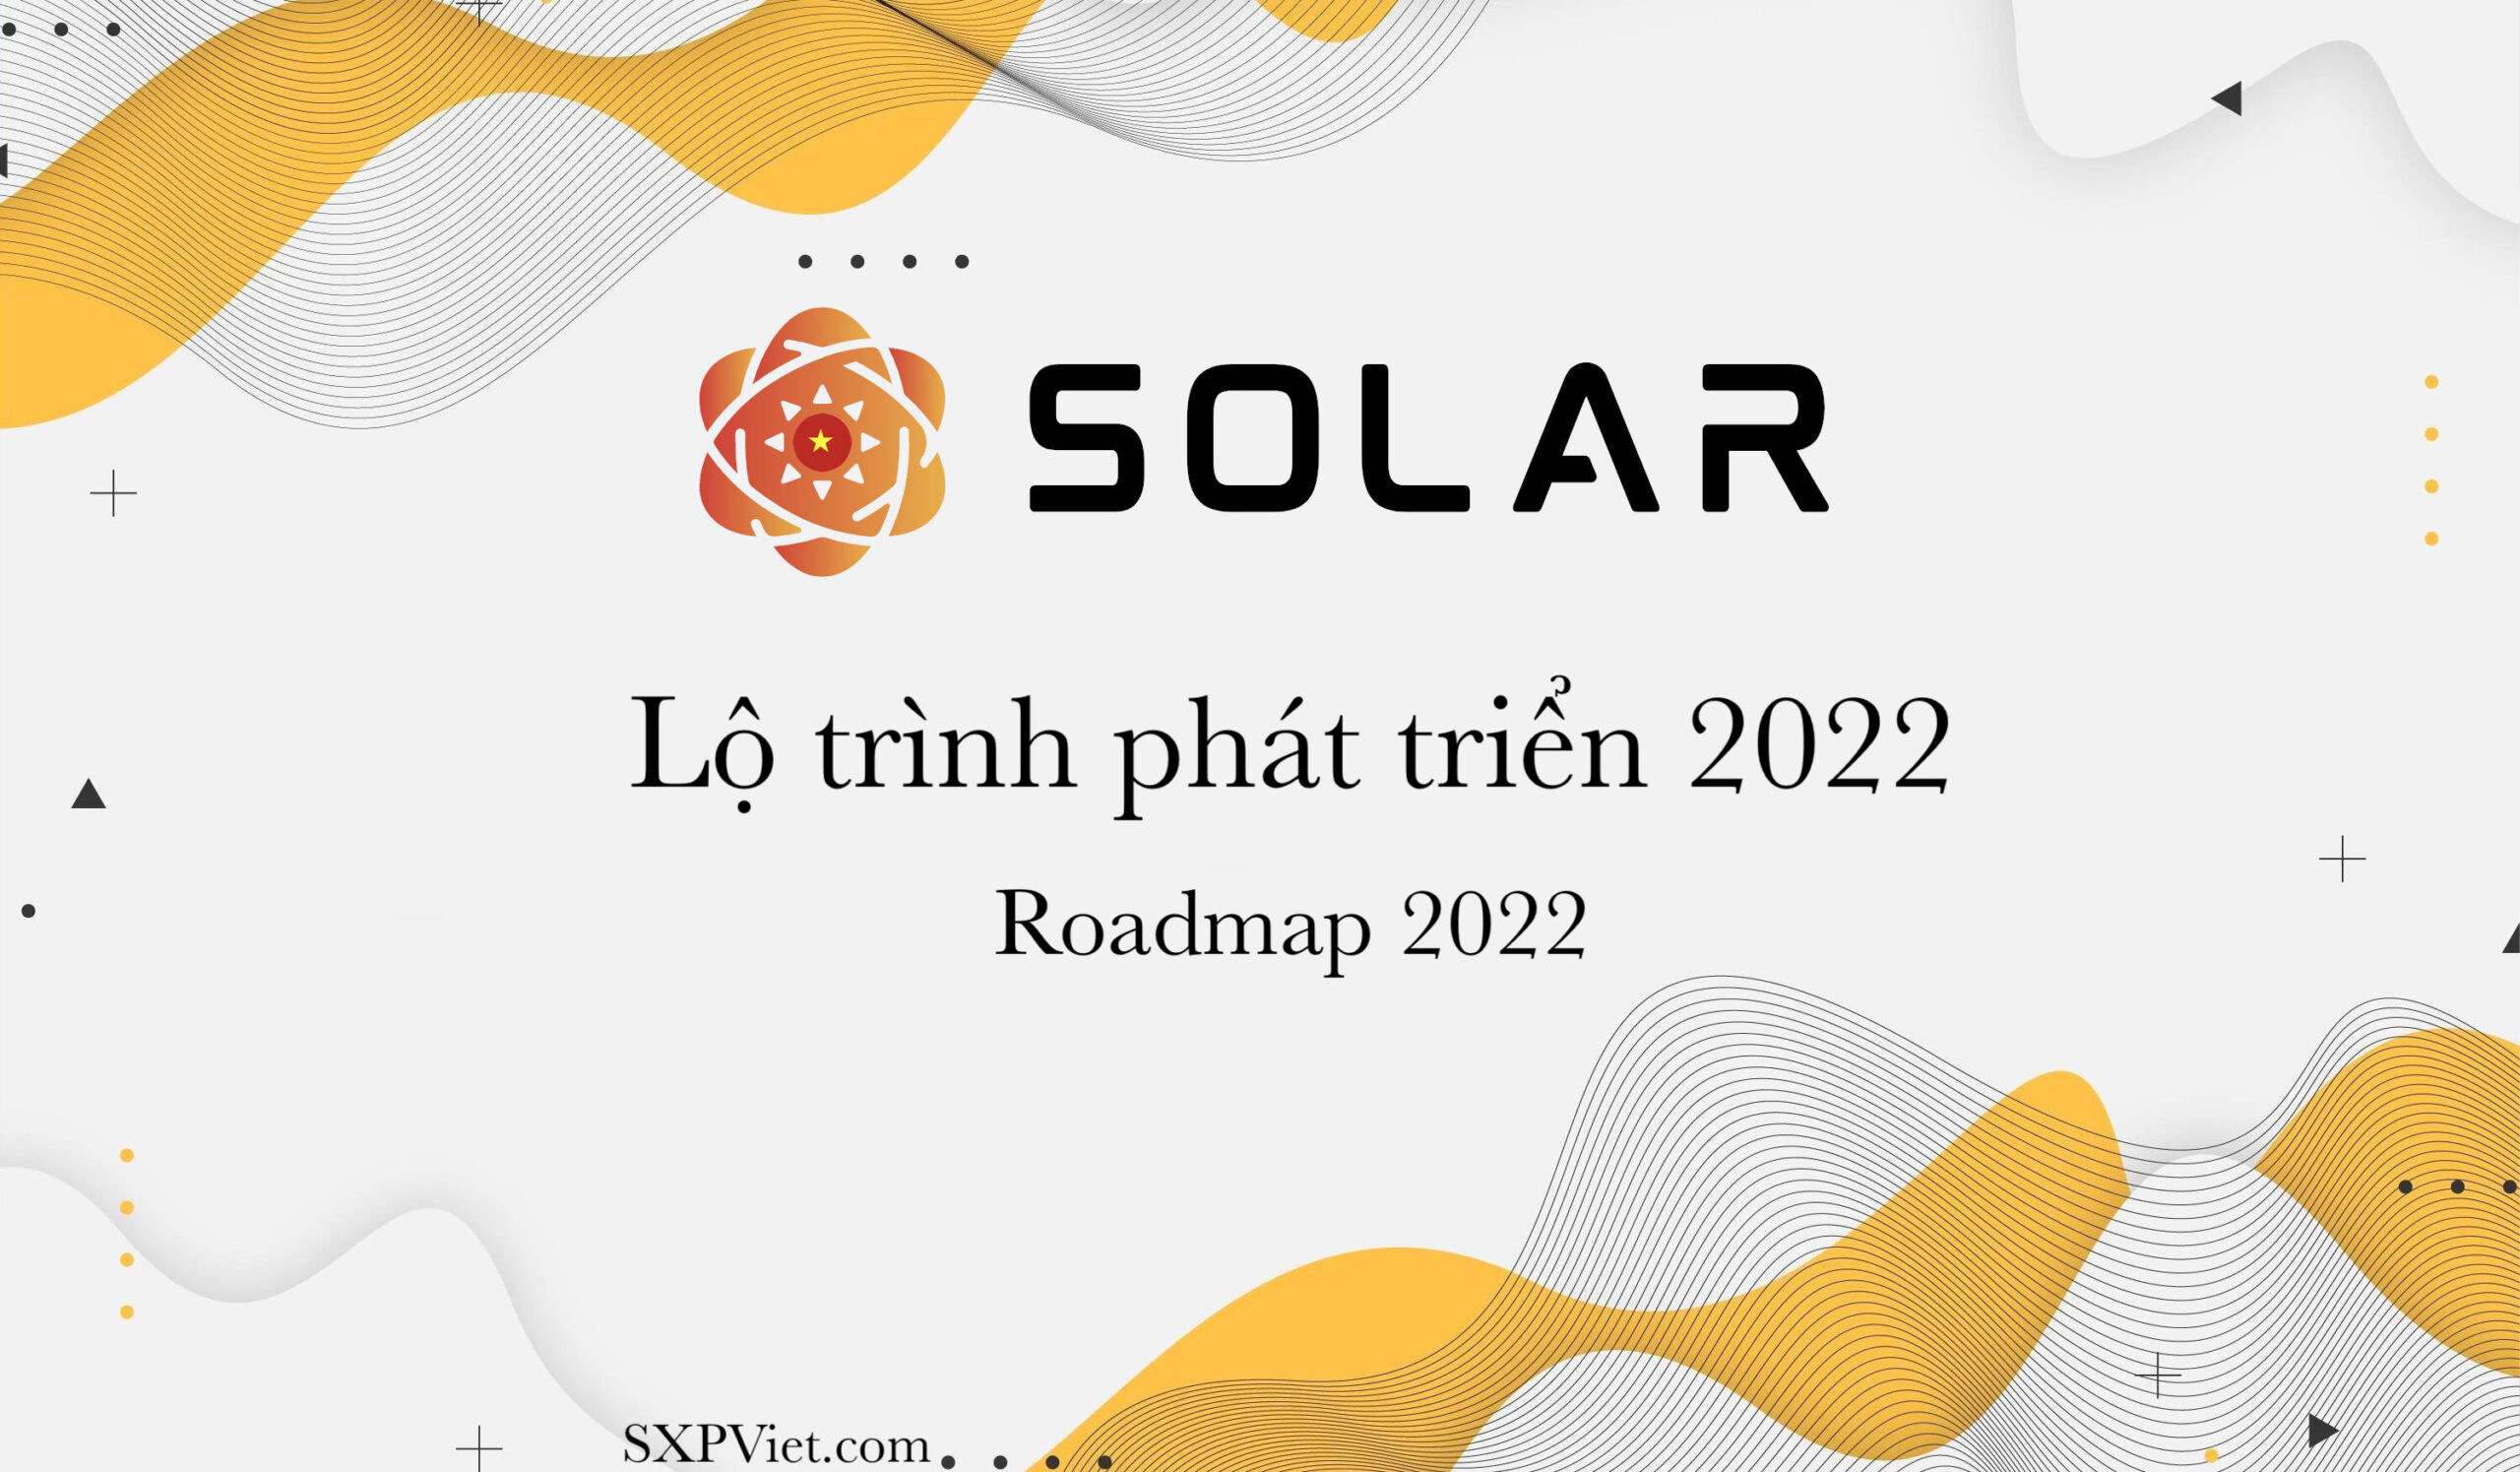 Roadmap 2022 của Solar Network